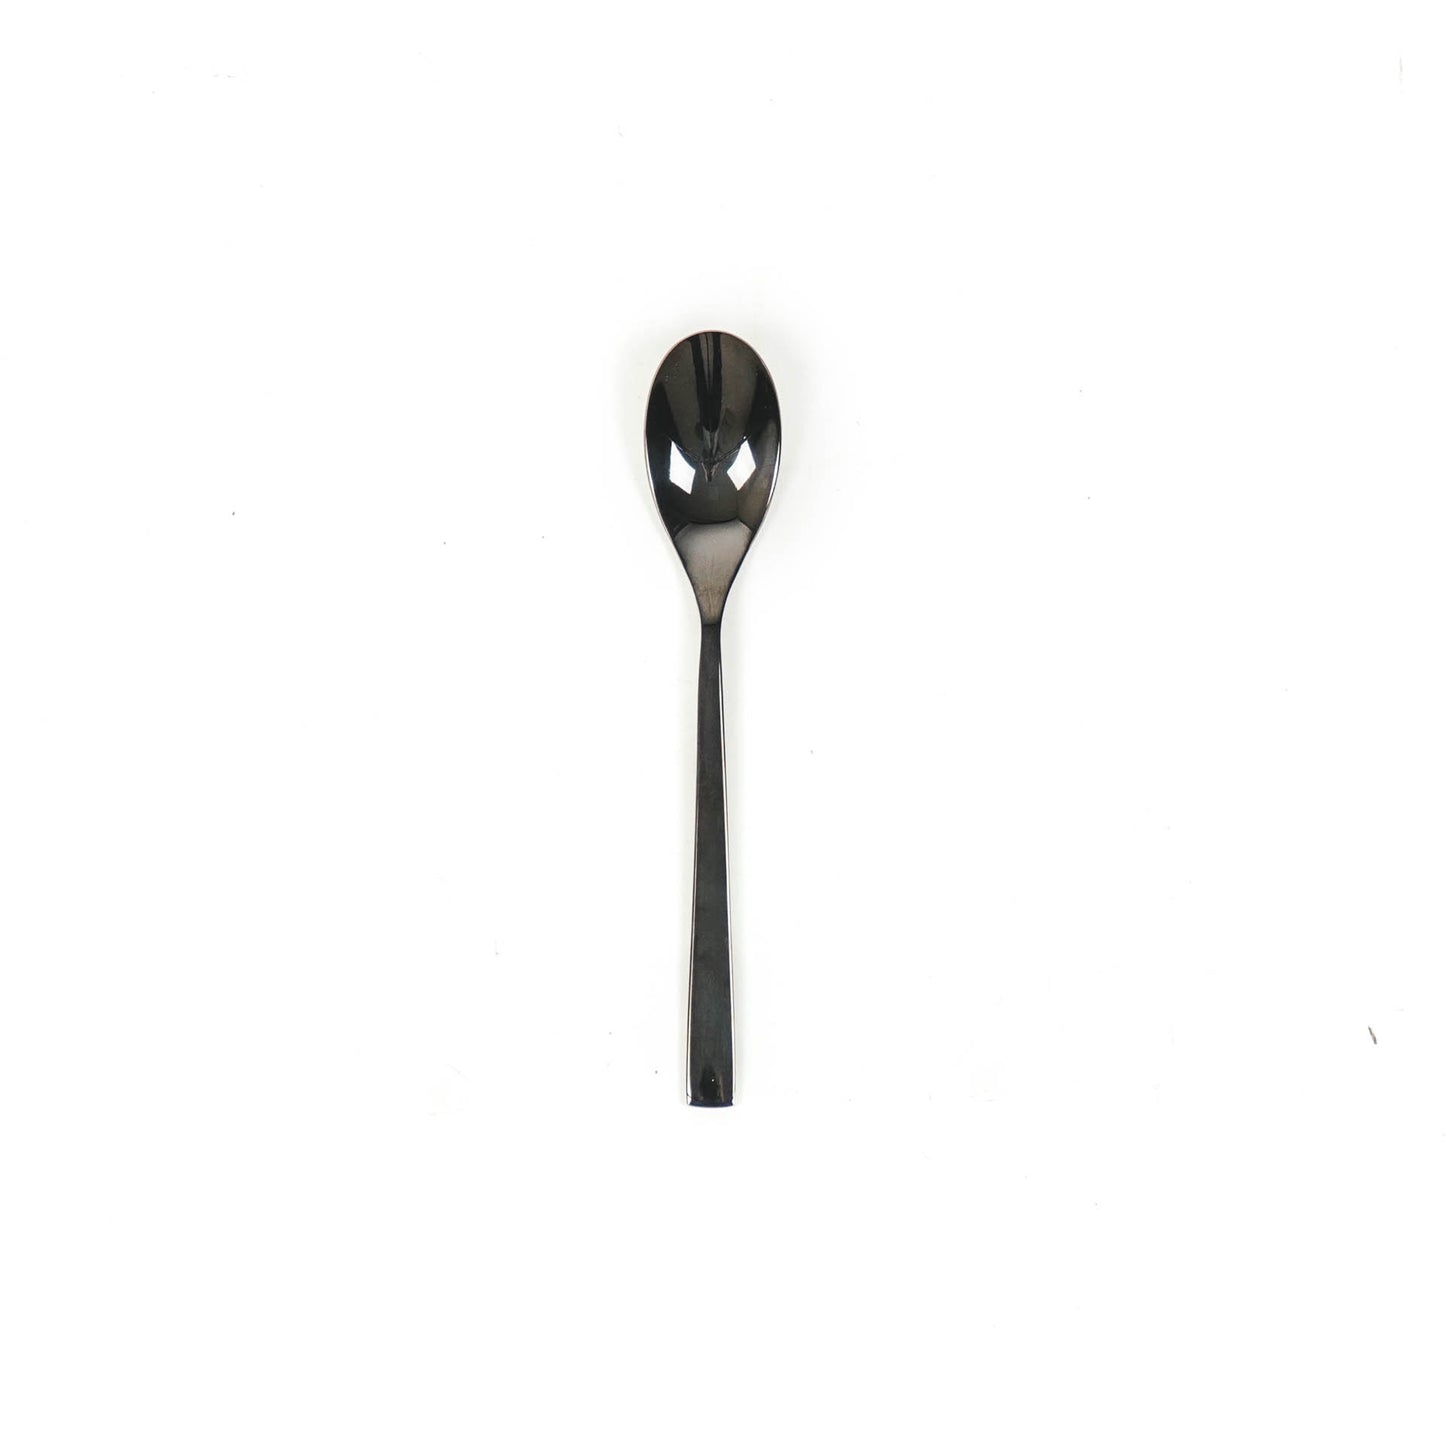 Housevitamin Cutlery Stainless steel - Black - set of 12